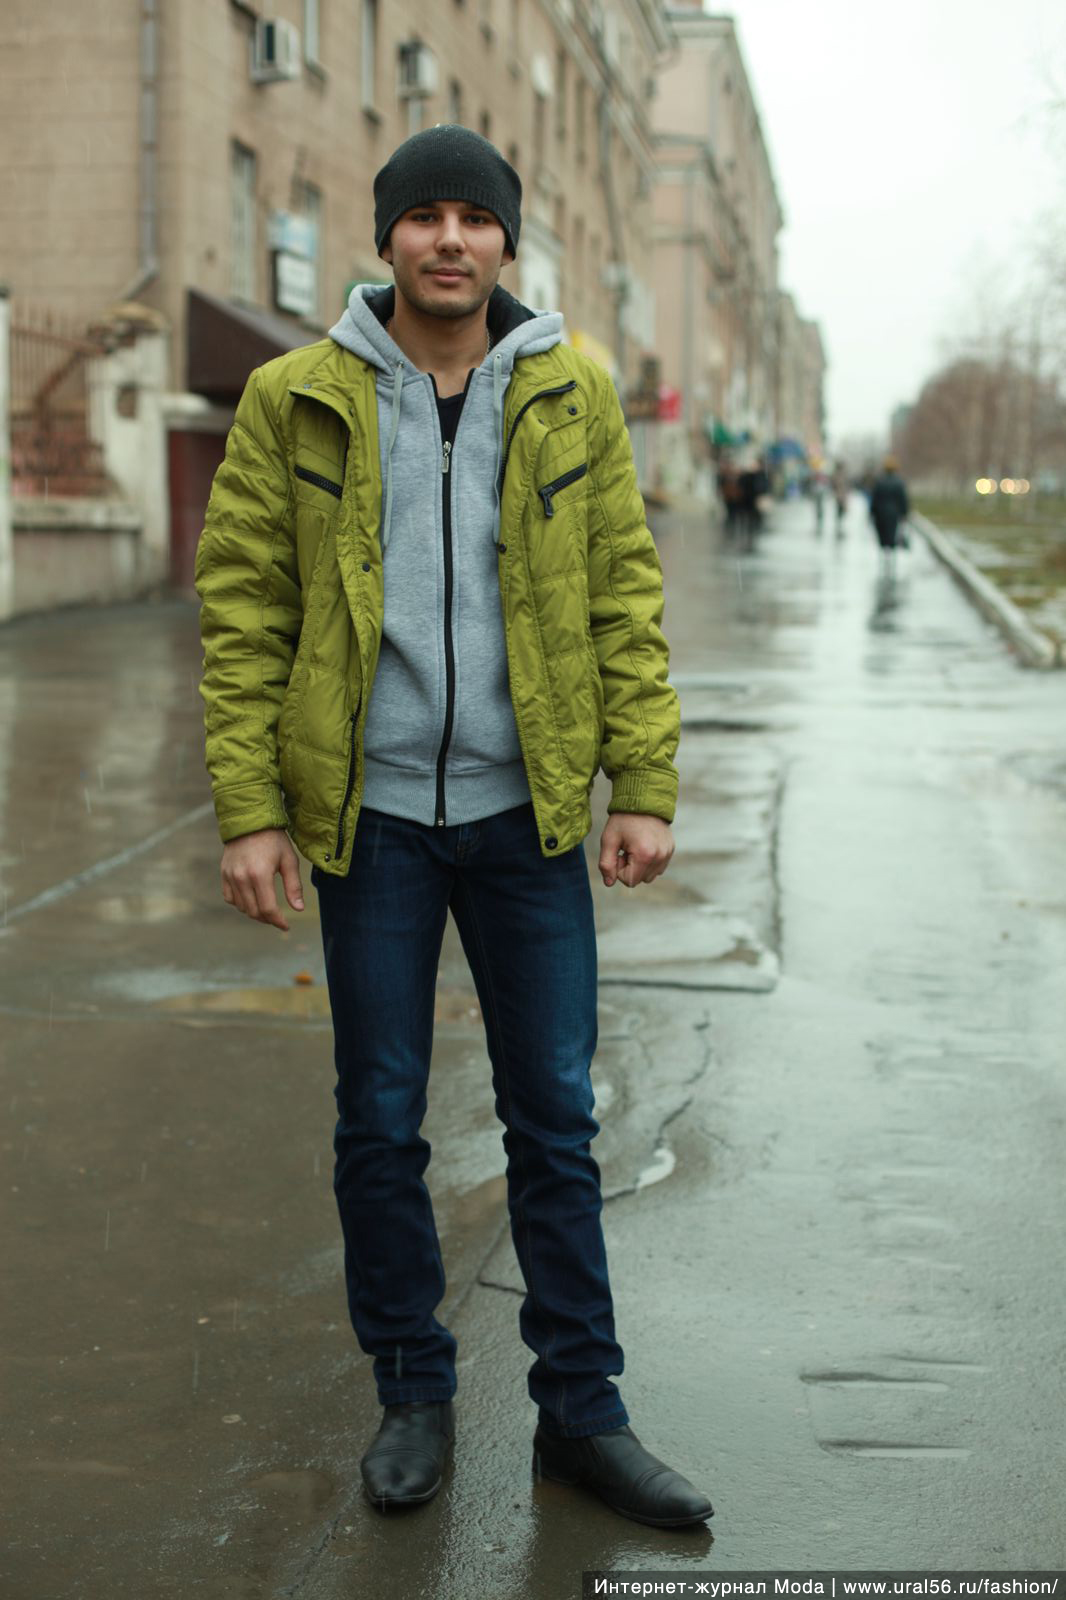 Streetstyle january 2014: Дмитрий